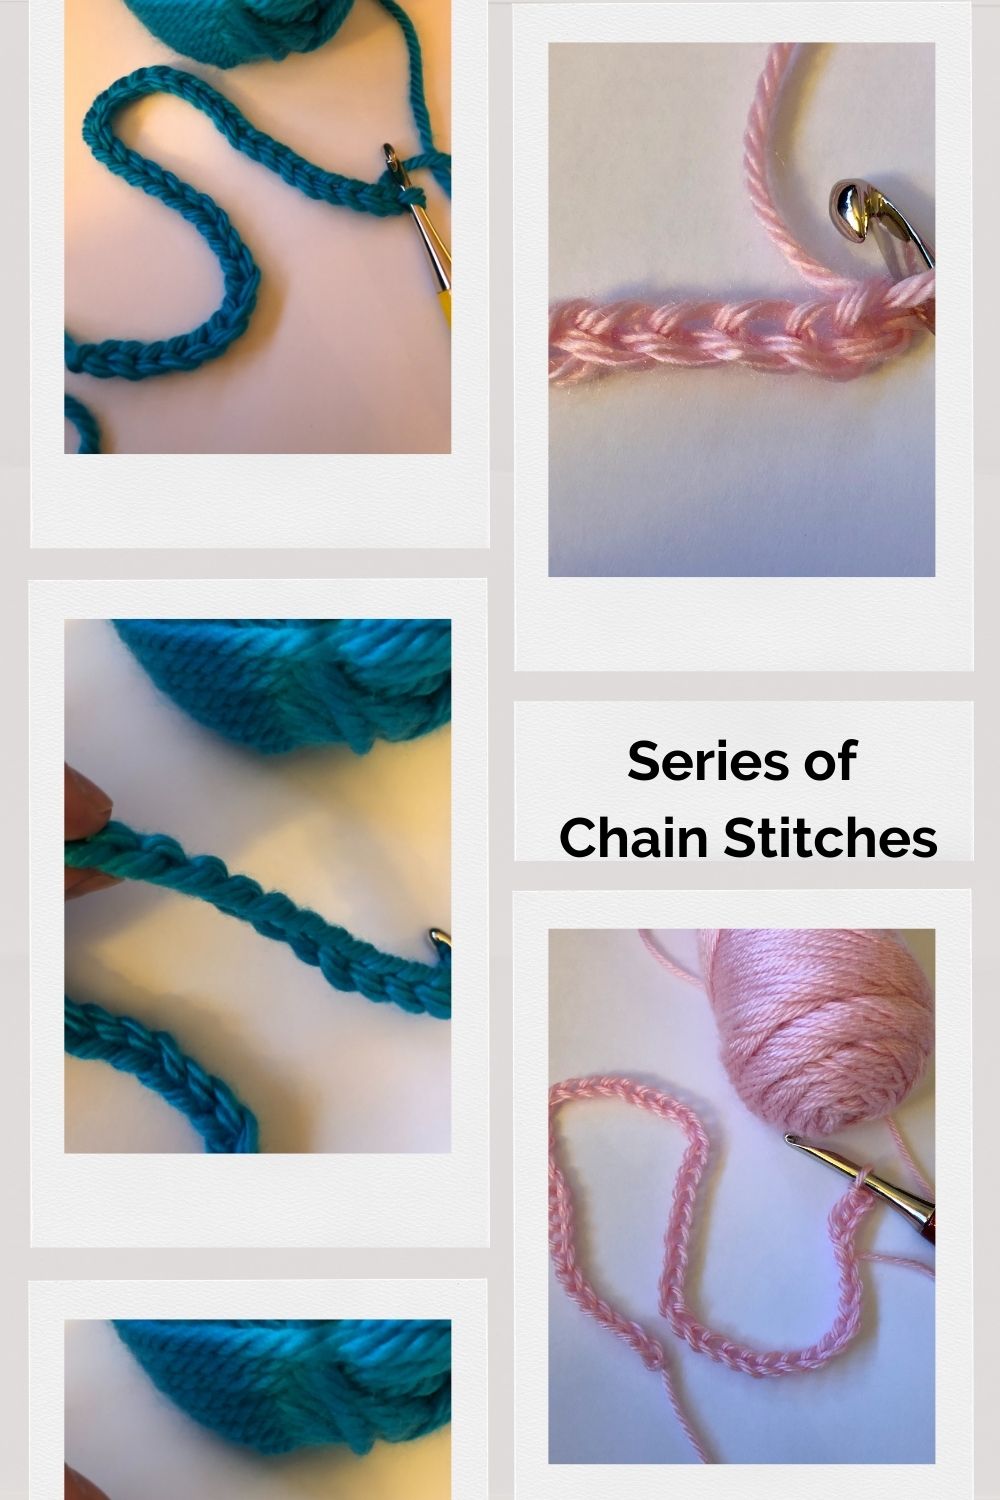 Series of Chain Stitches